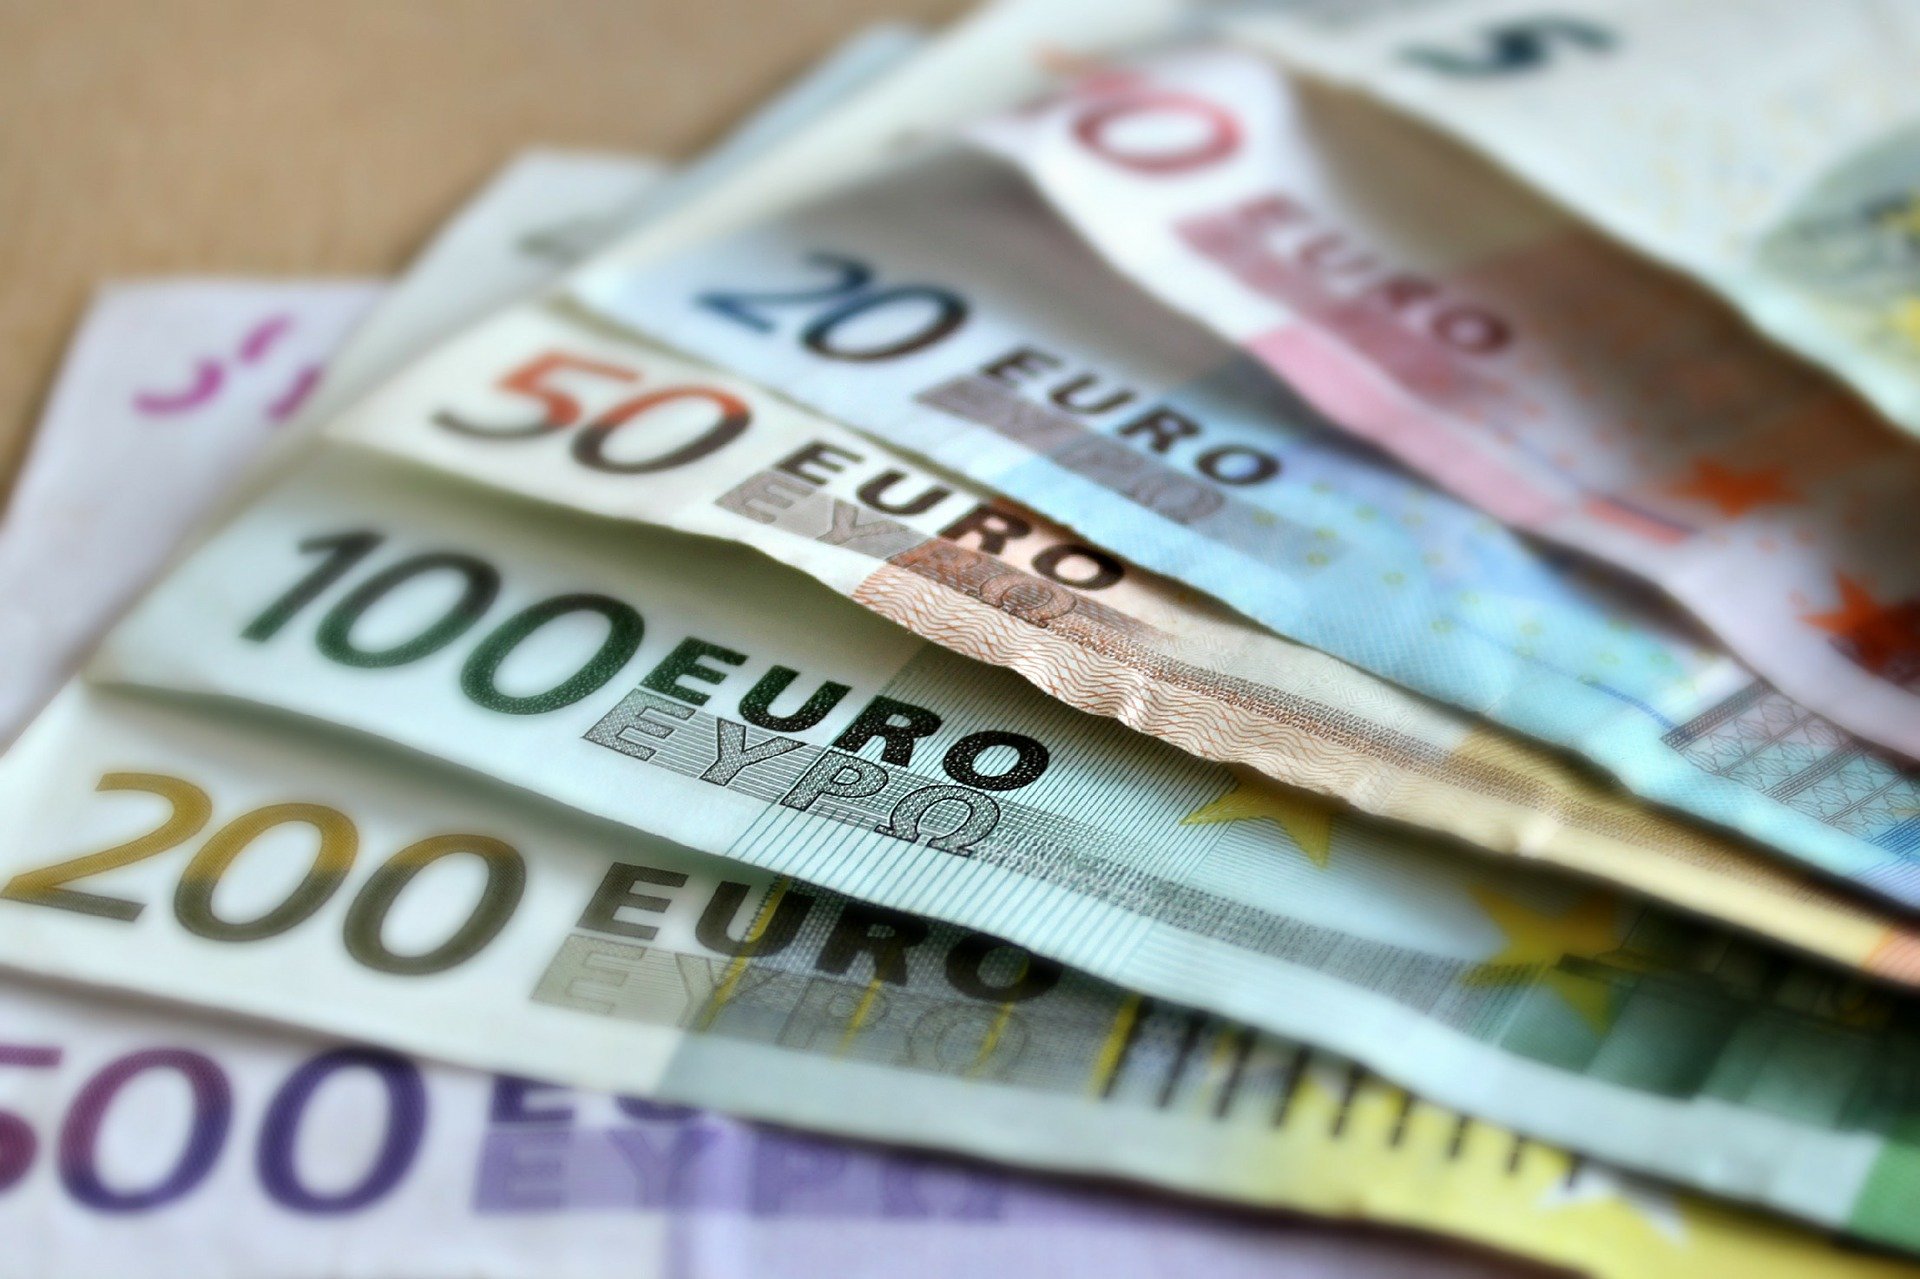 2002, passage à l’Euro, martaposemuckel @pixabay